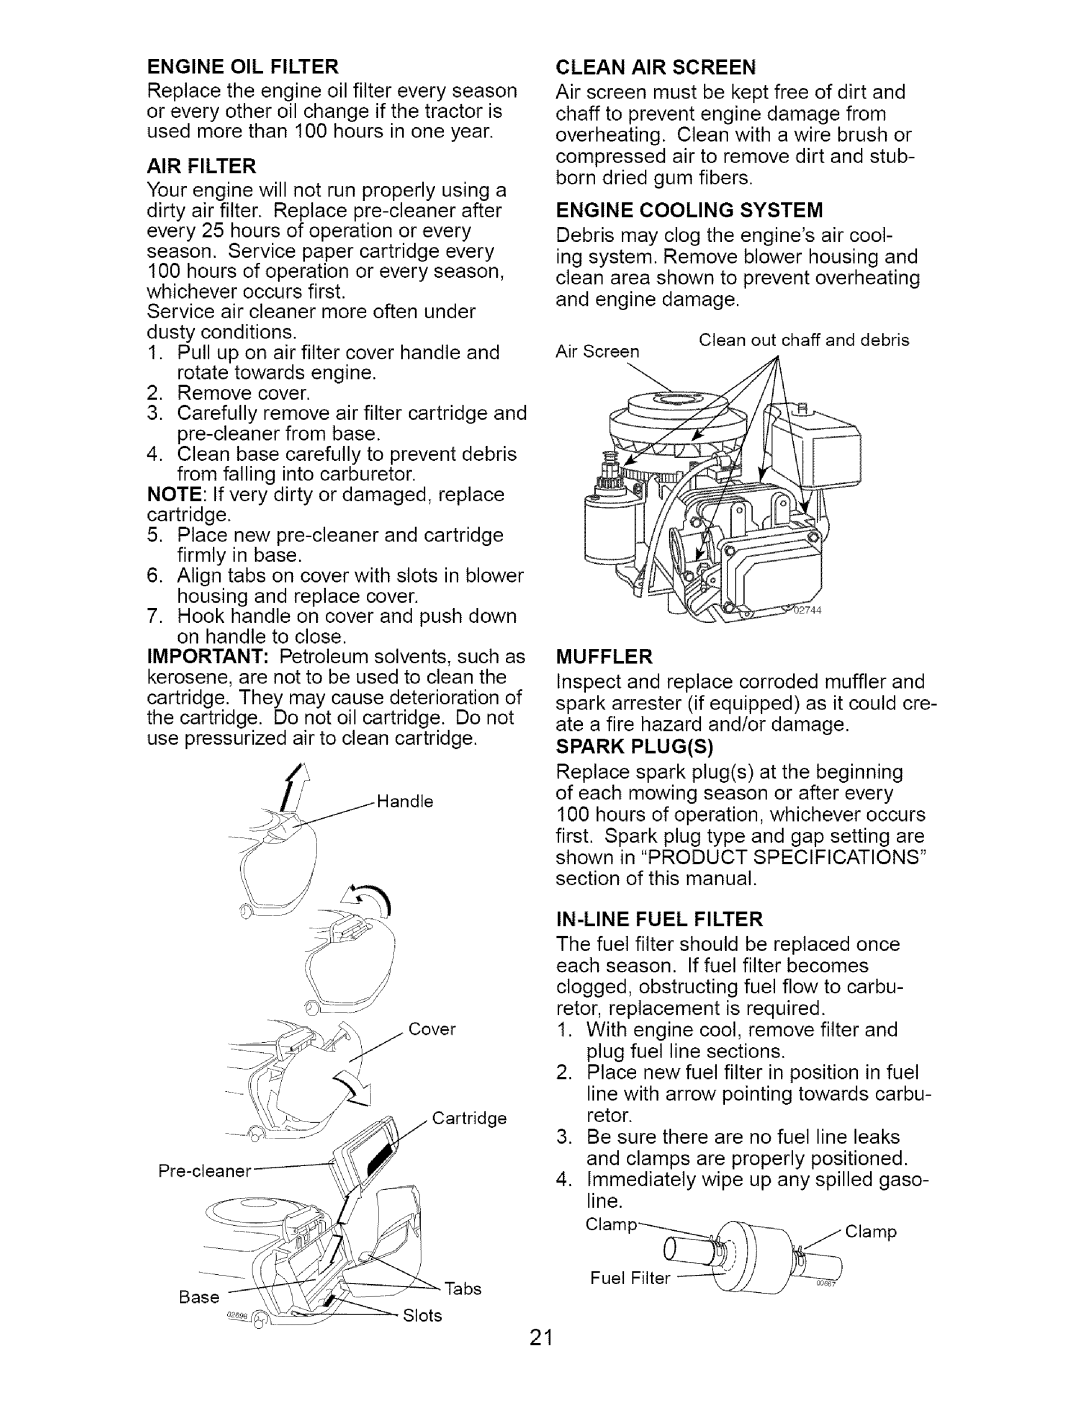 Craftsman 917.273642 manual Engine Oil Filter, Air Filter, Engine Cooling System, Muffler, Spark Plugs, In-Linefuel Filter 